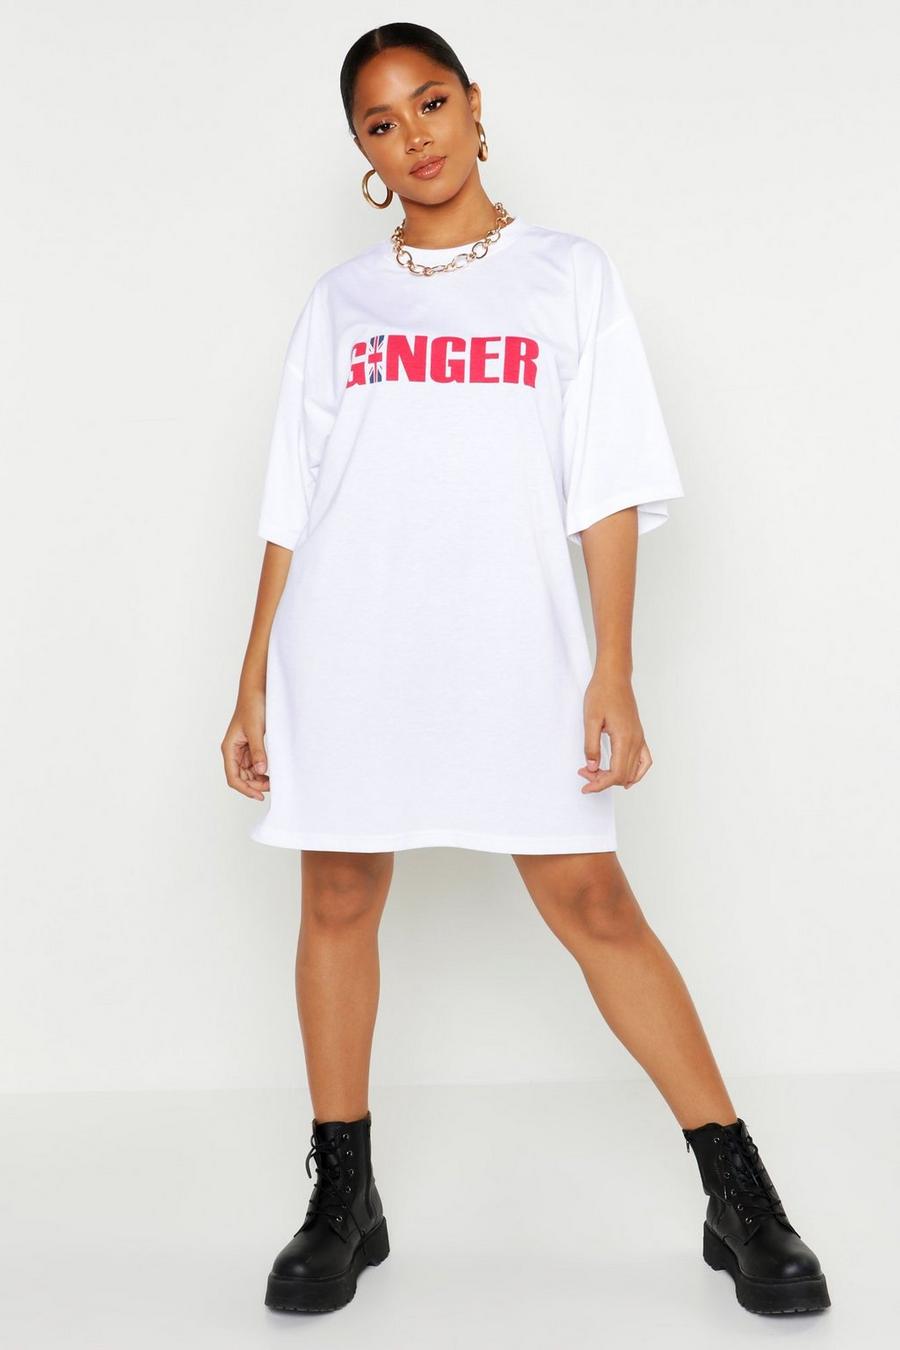 Ginger Graphic T-Shirt Dress image number 1